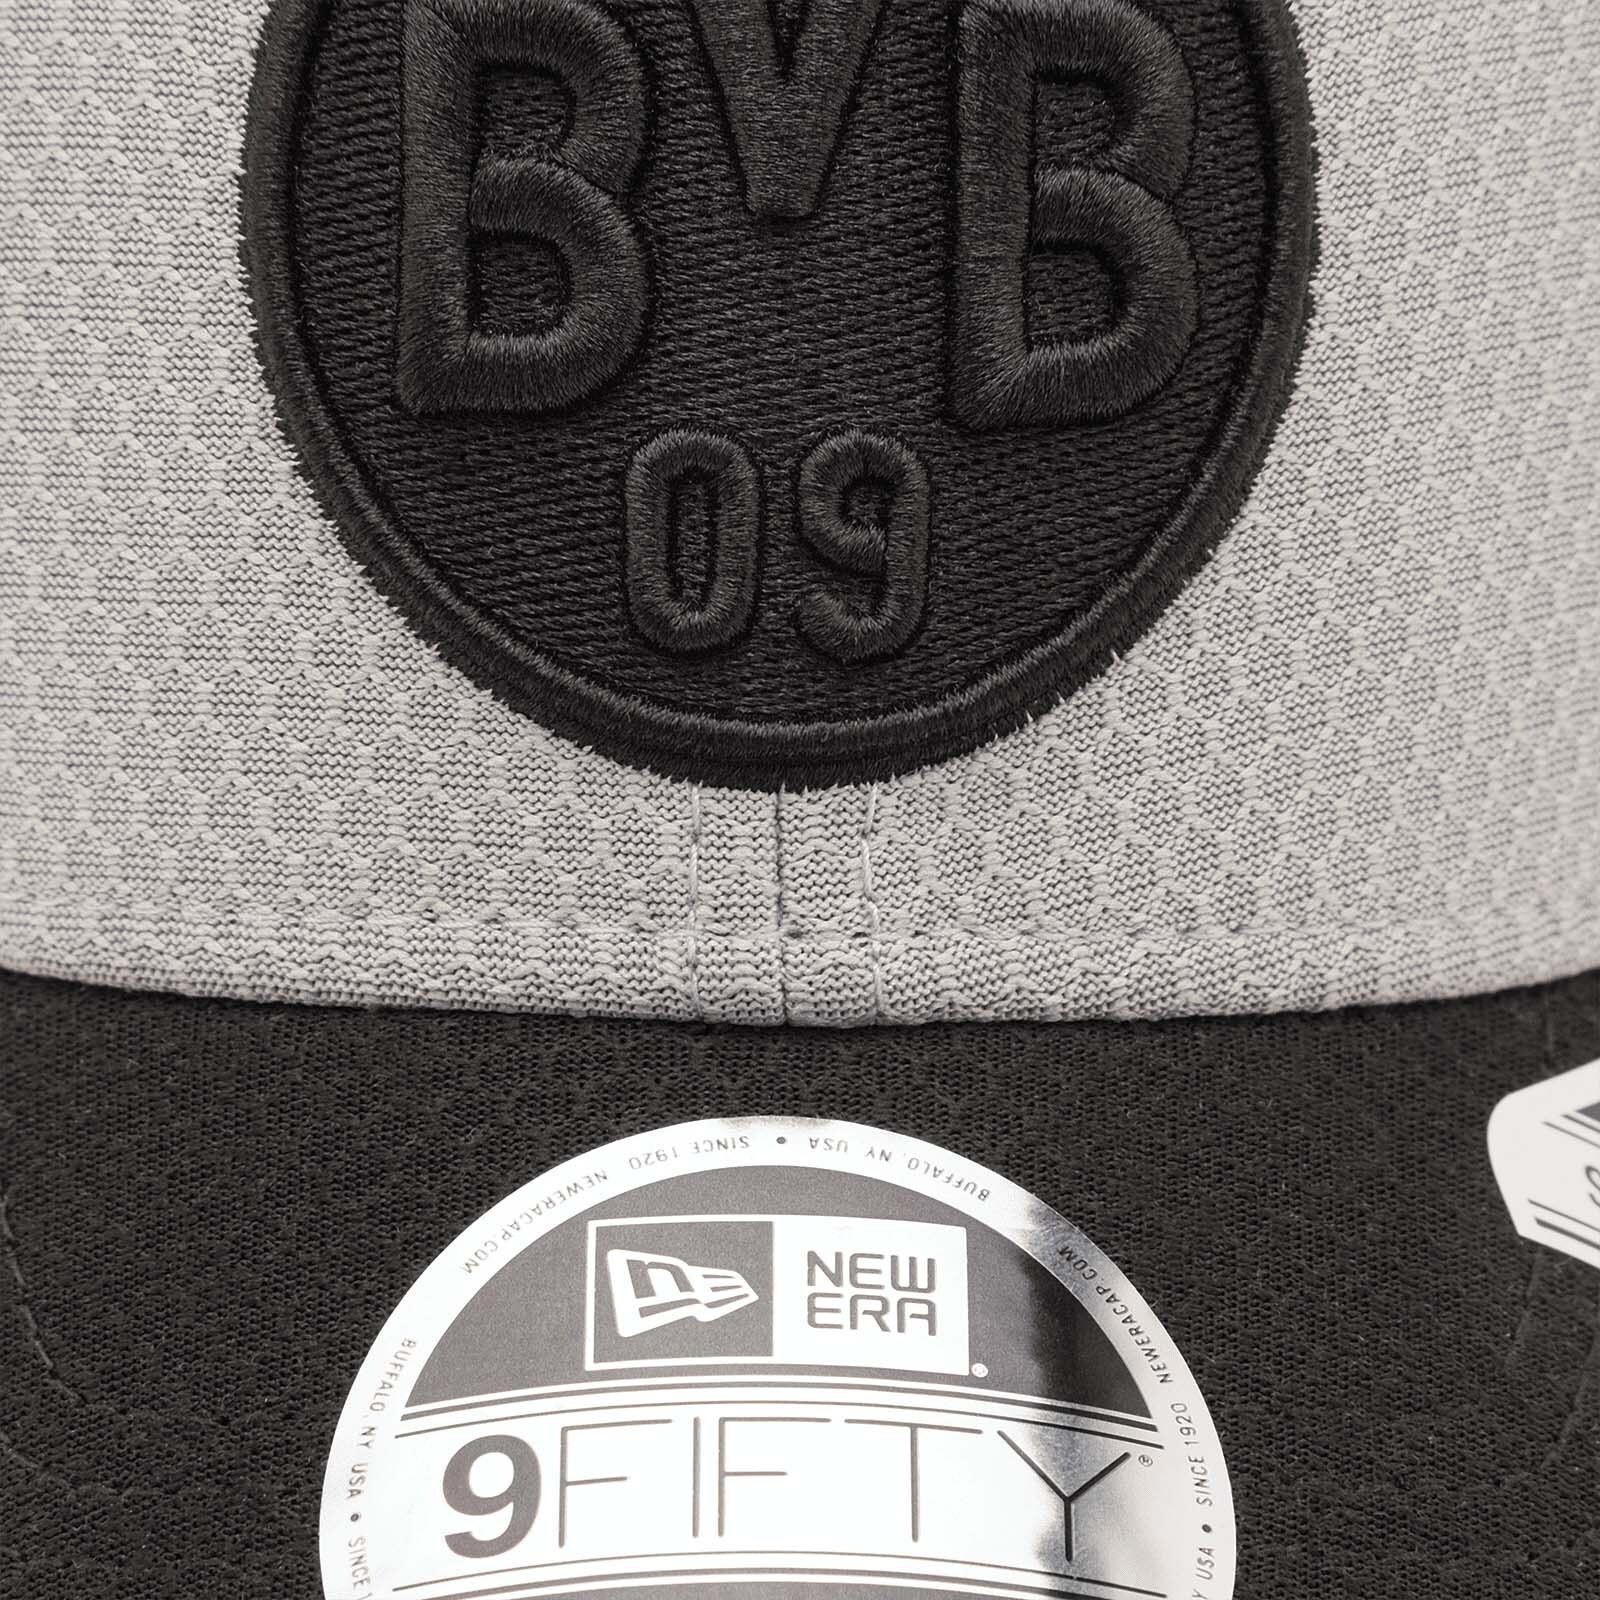 BVB 09 Borussia Dortmund Grau Schwarz Verstellbare 9Fifty Stretch Snapback Cap New Era